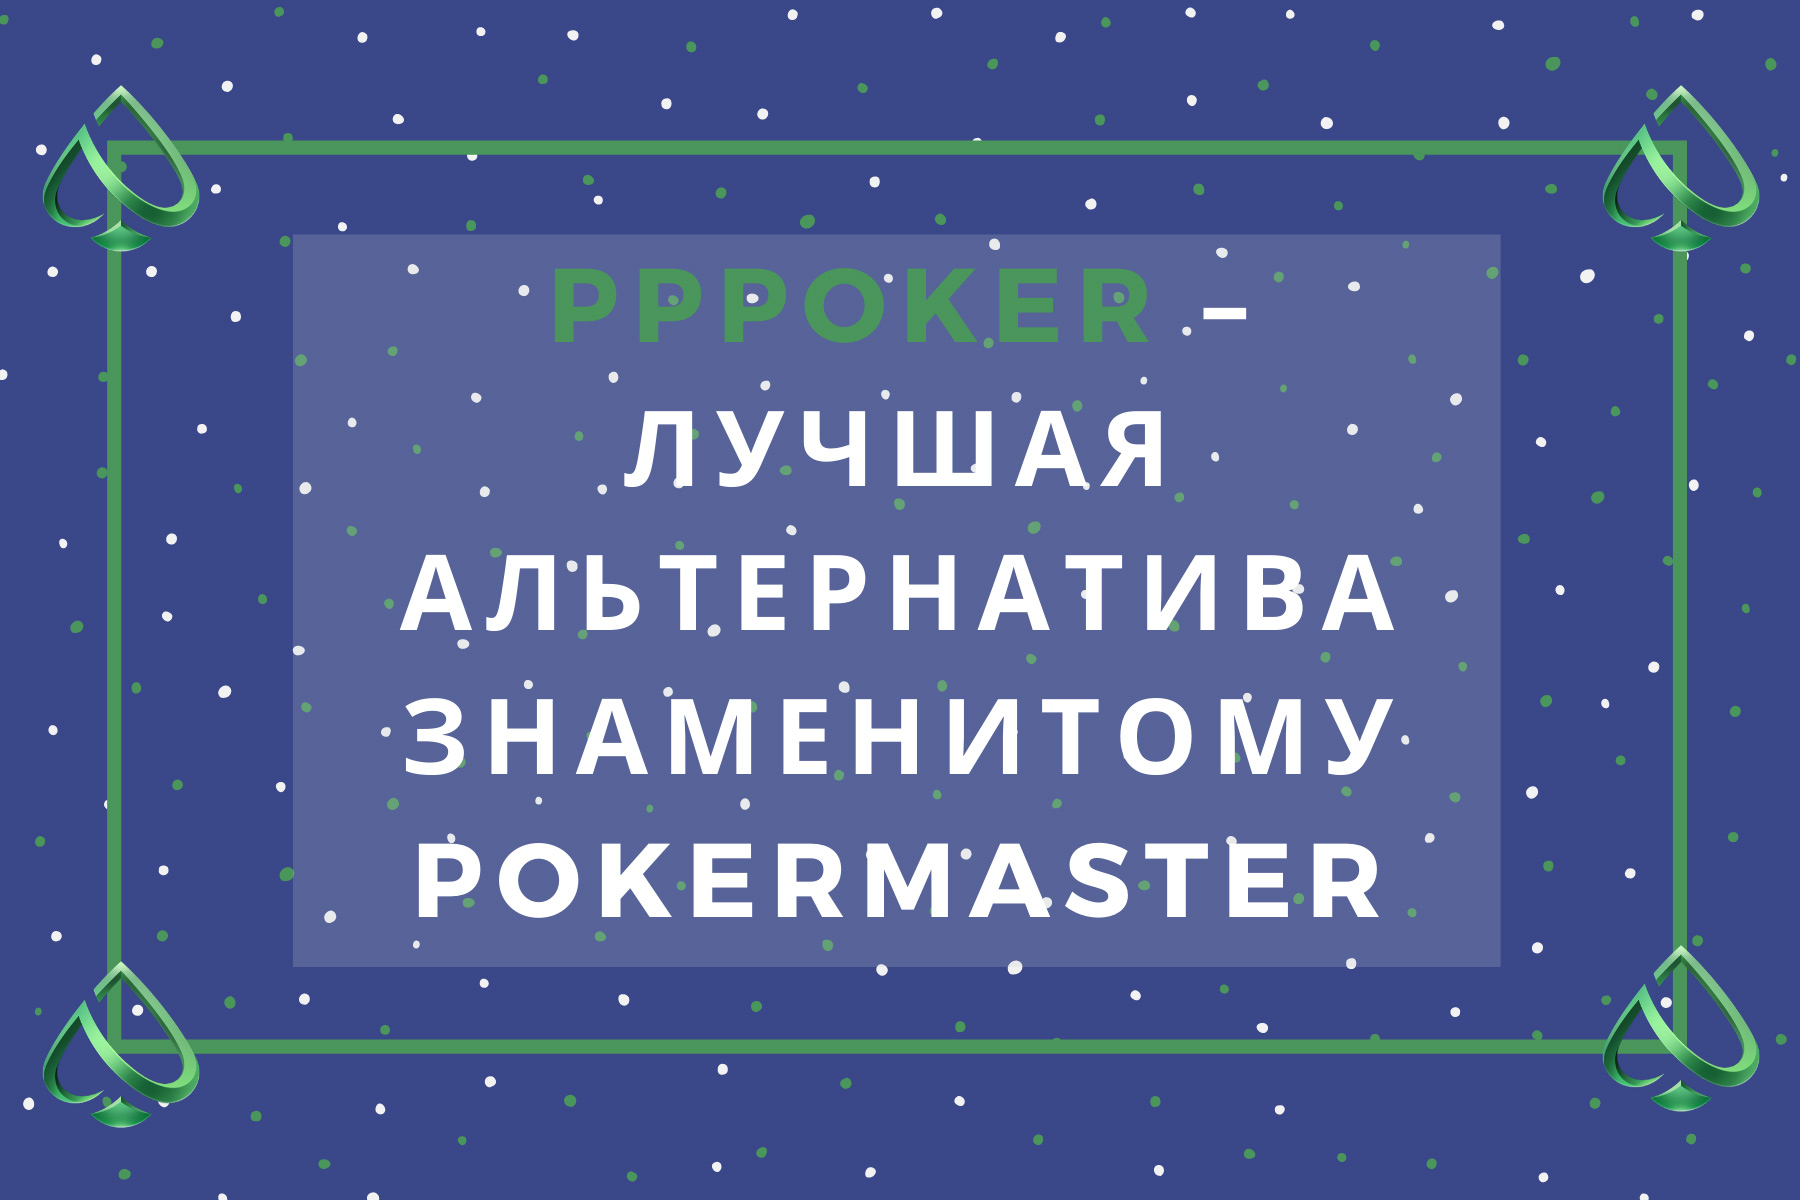 Китайский рум PPPoker - лучшая альтернатива знаменитому Pokermaster.